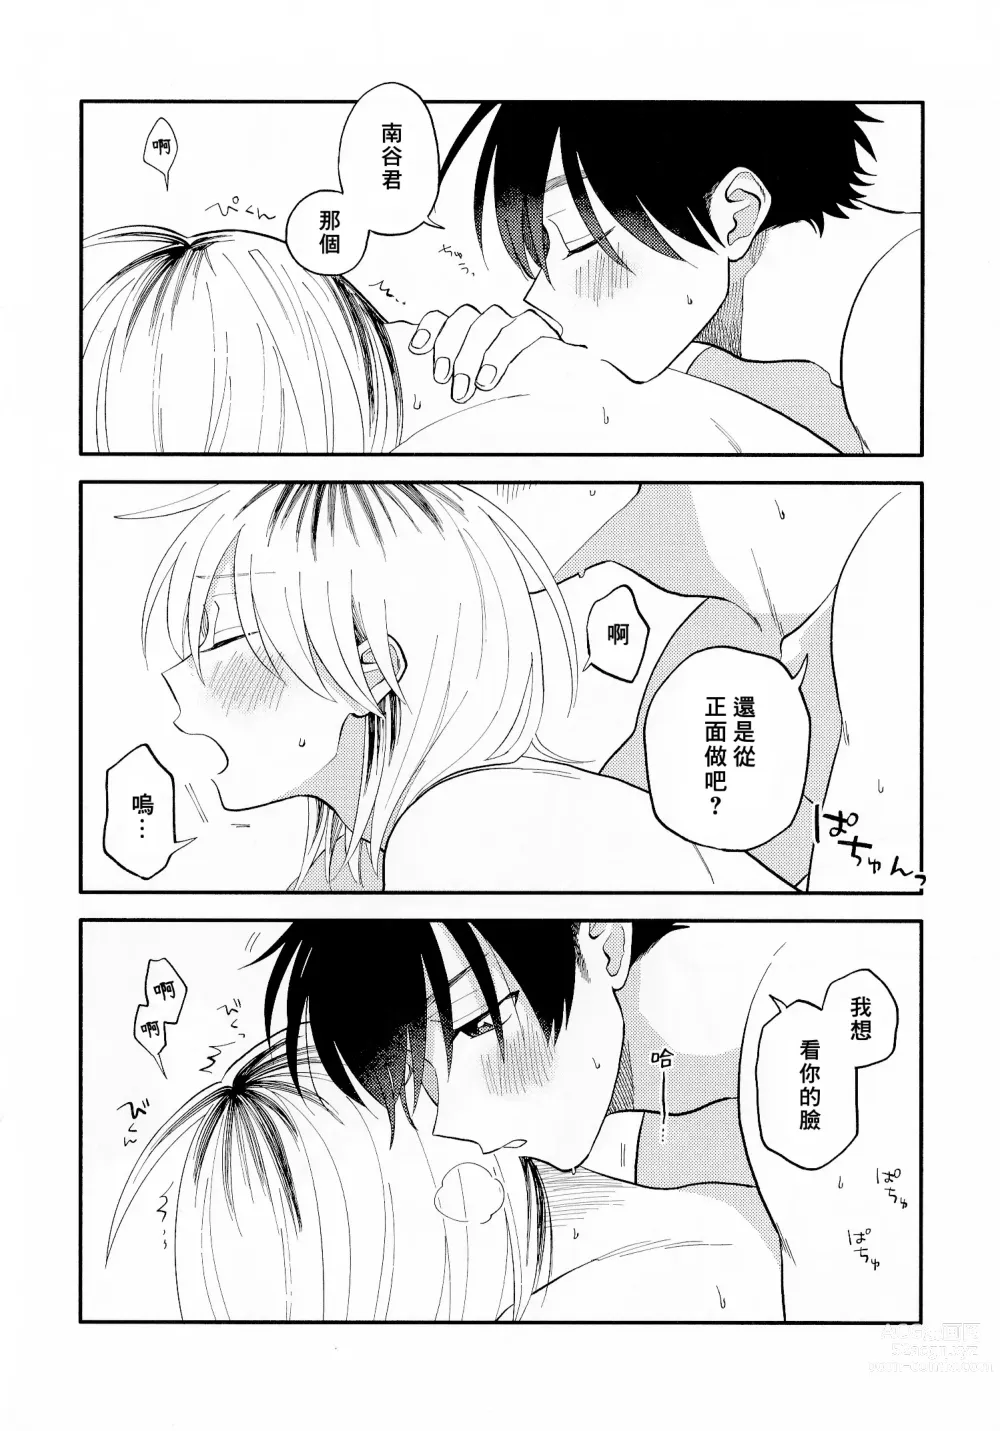 Page 257 of manga 北山君与南谷君 2